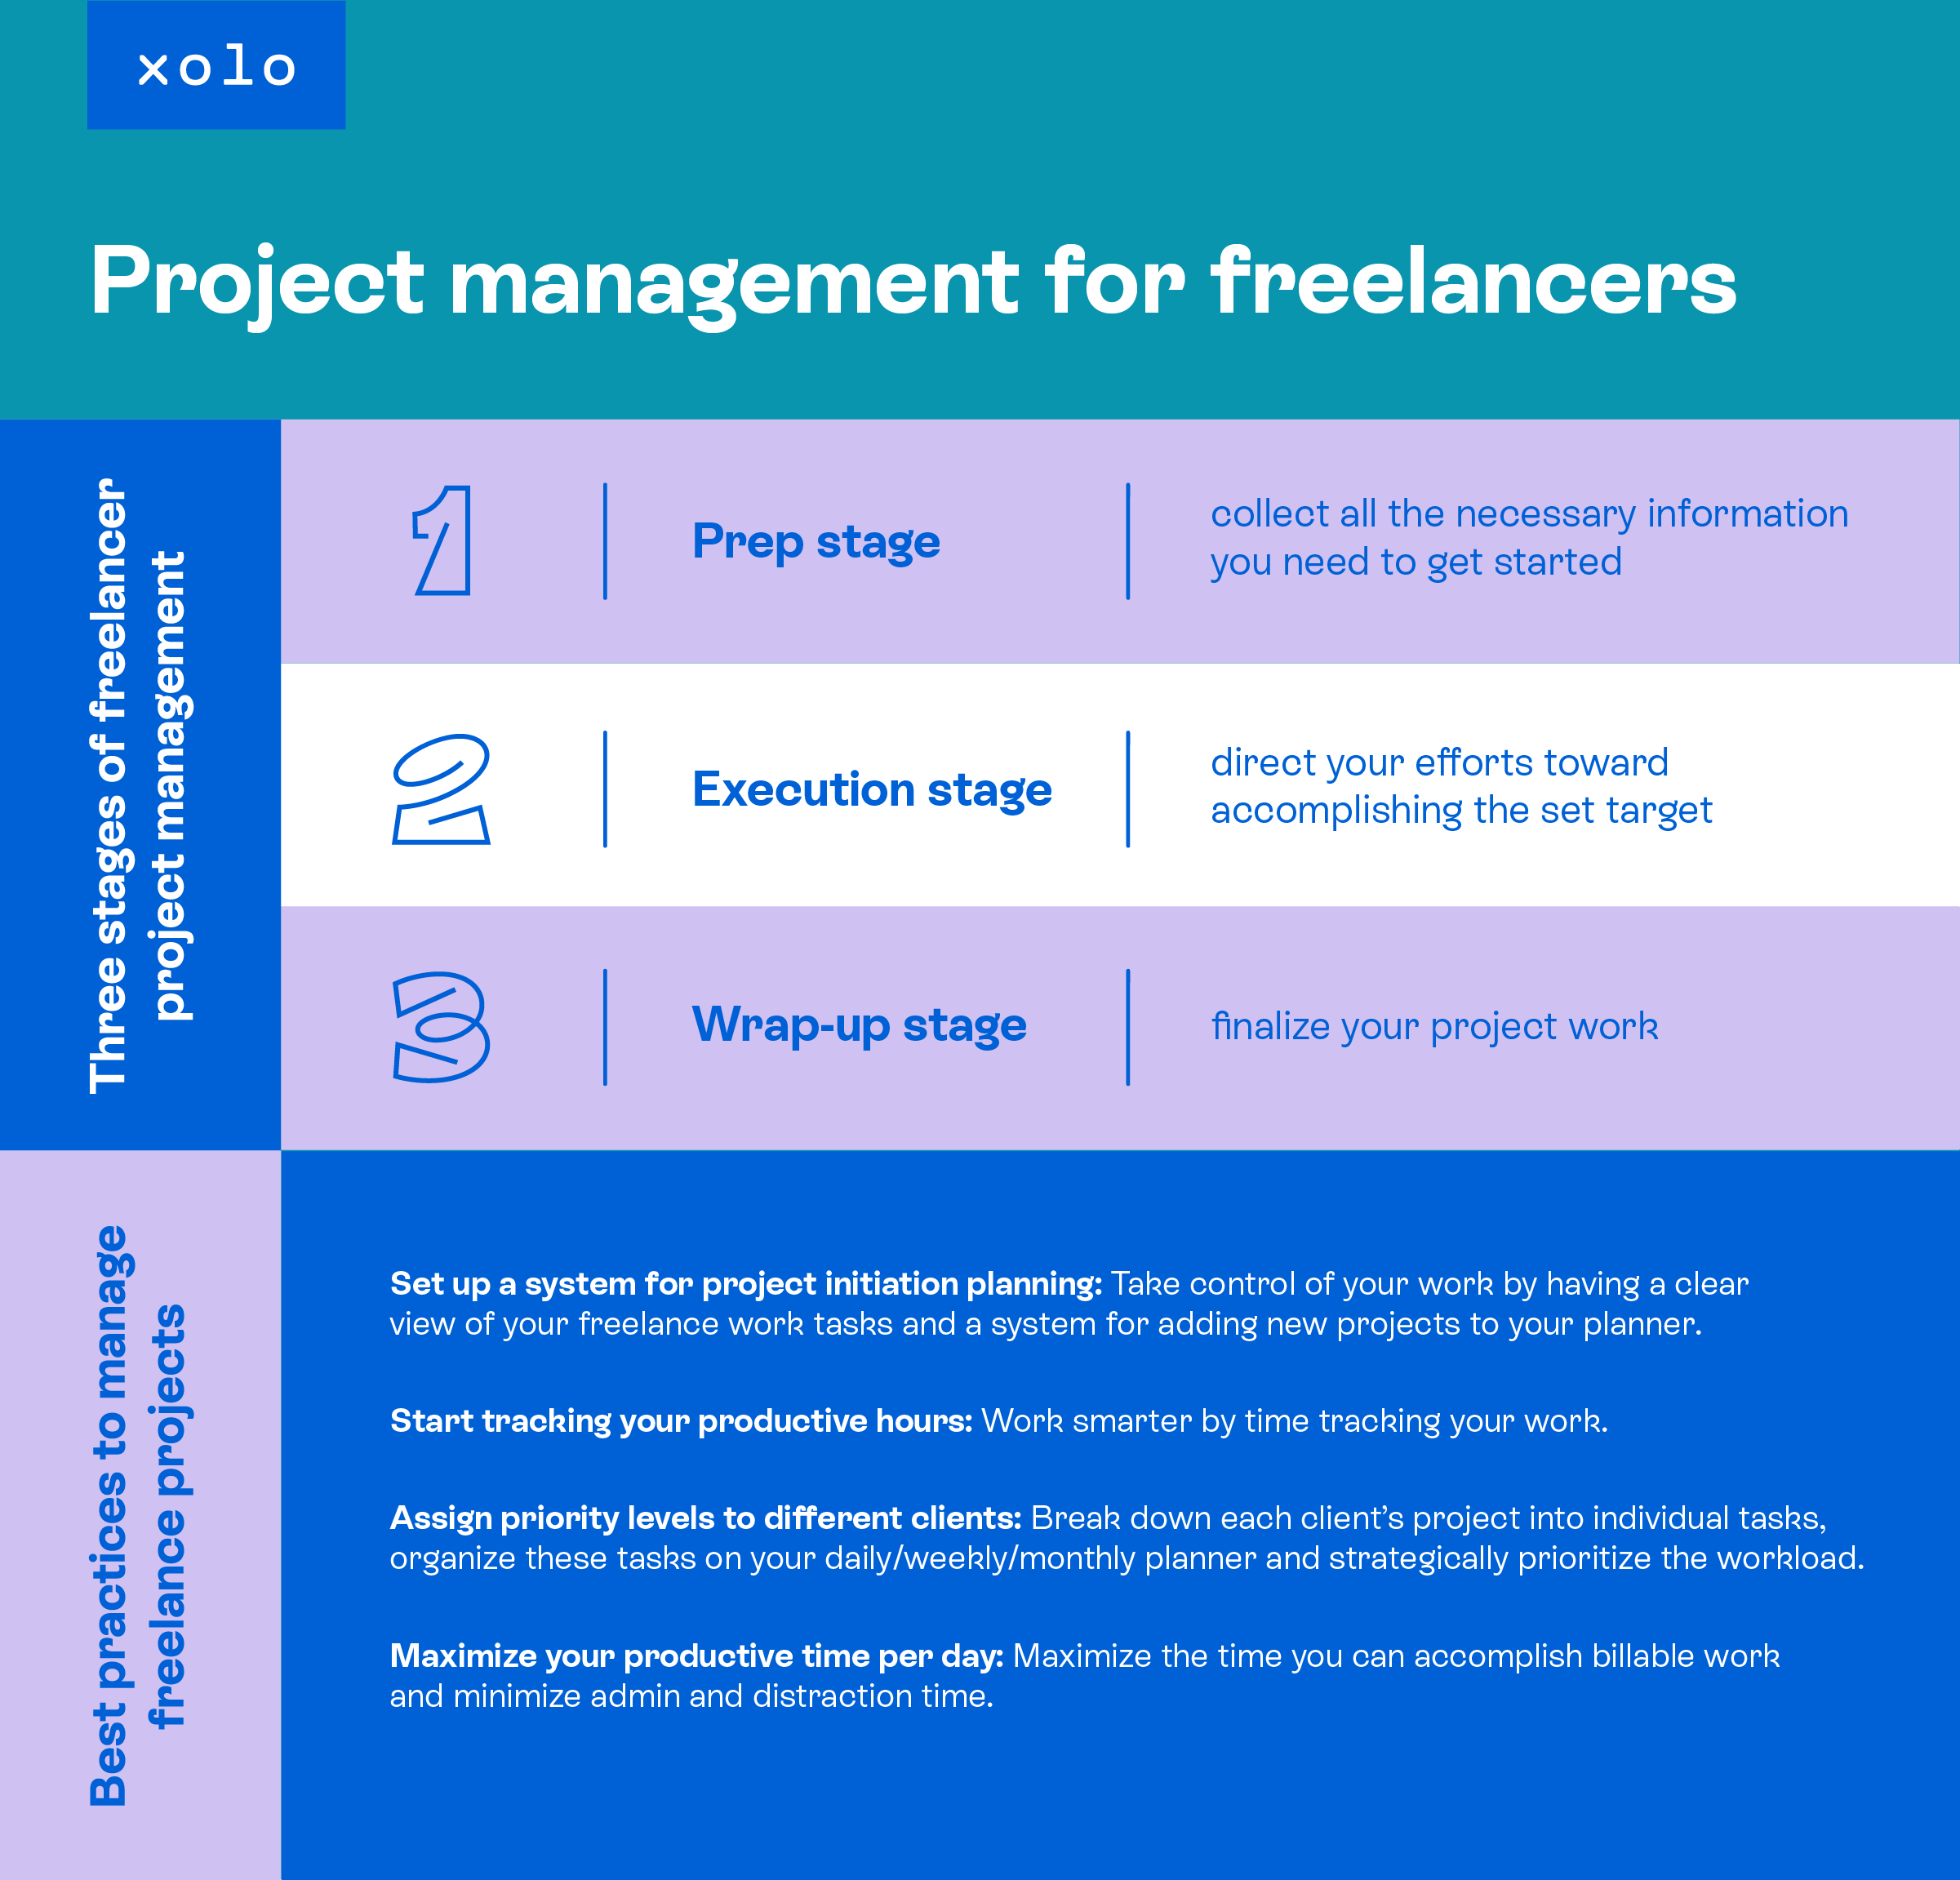 Project management for freelancers